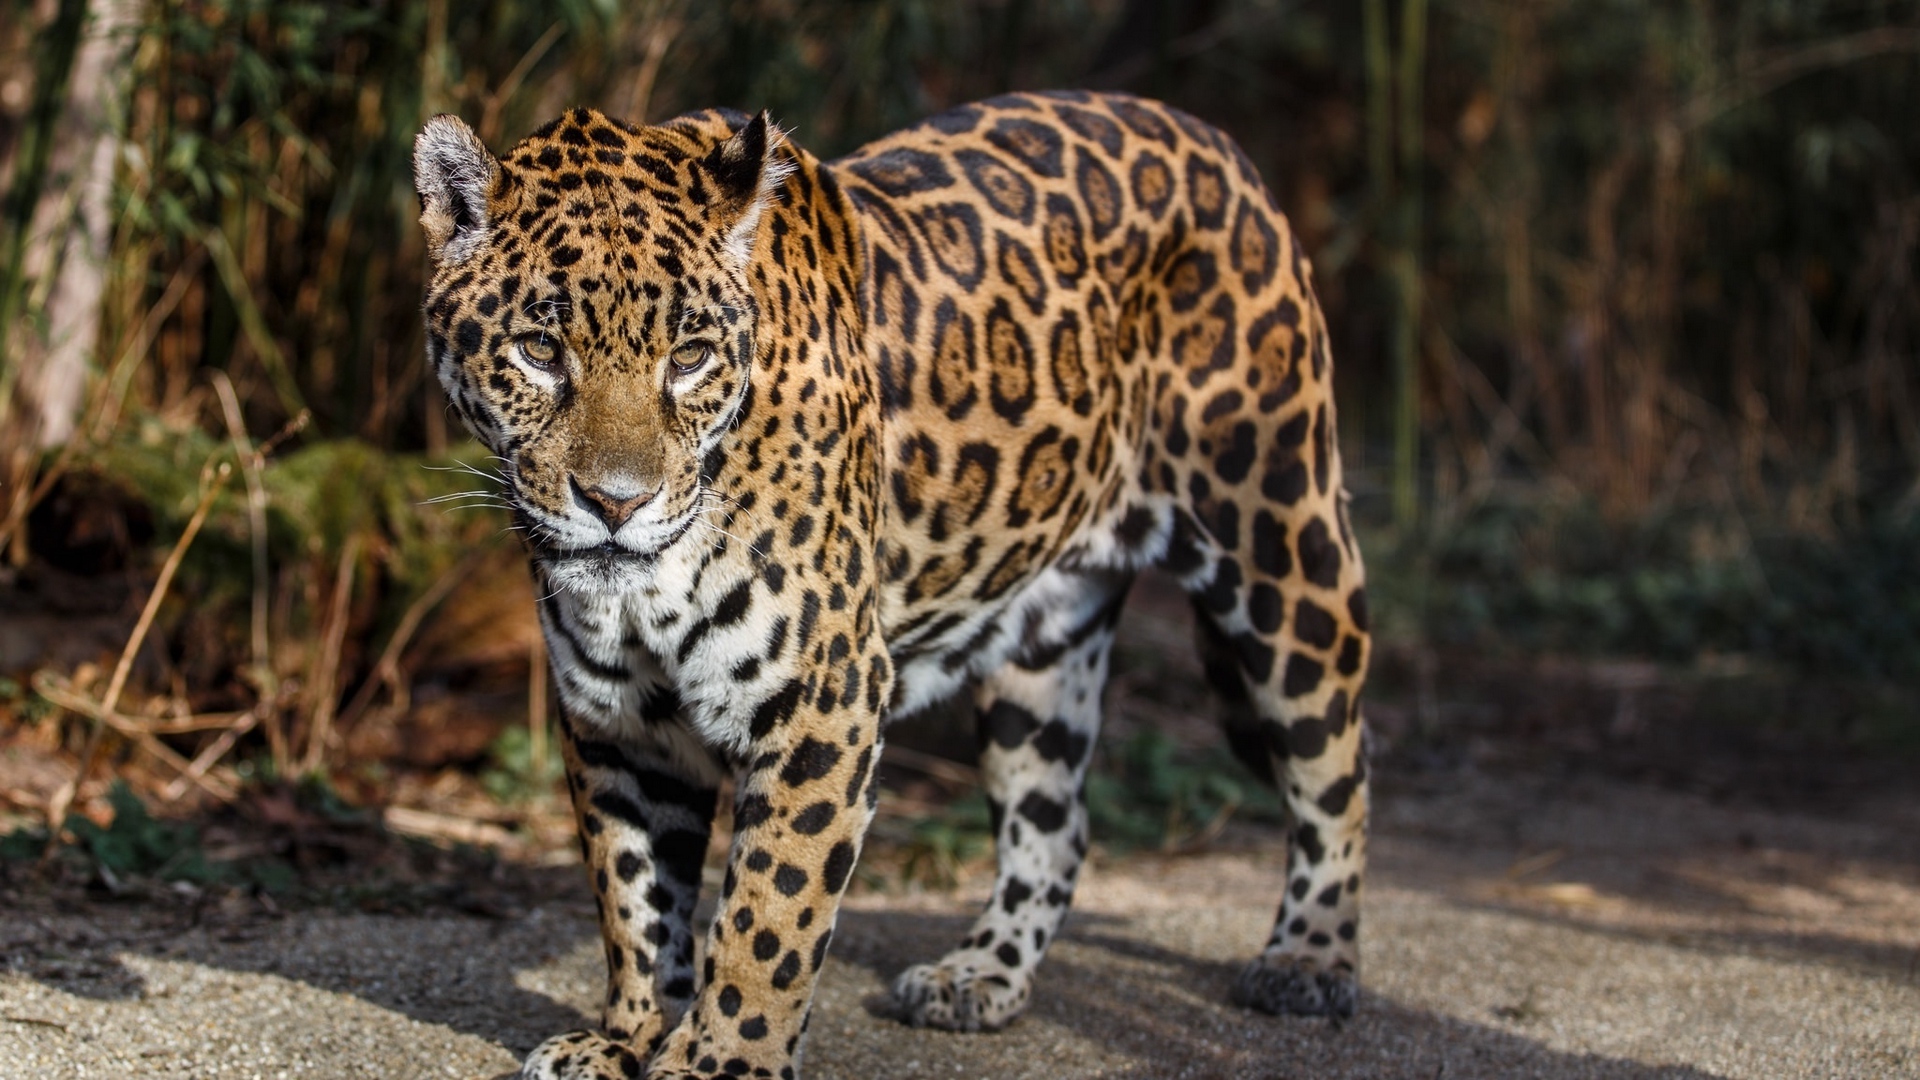 Download wallpaper 1920x1080 jaguar, wild cat, predator, spots full ...